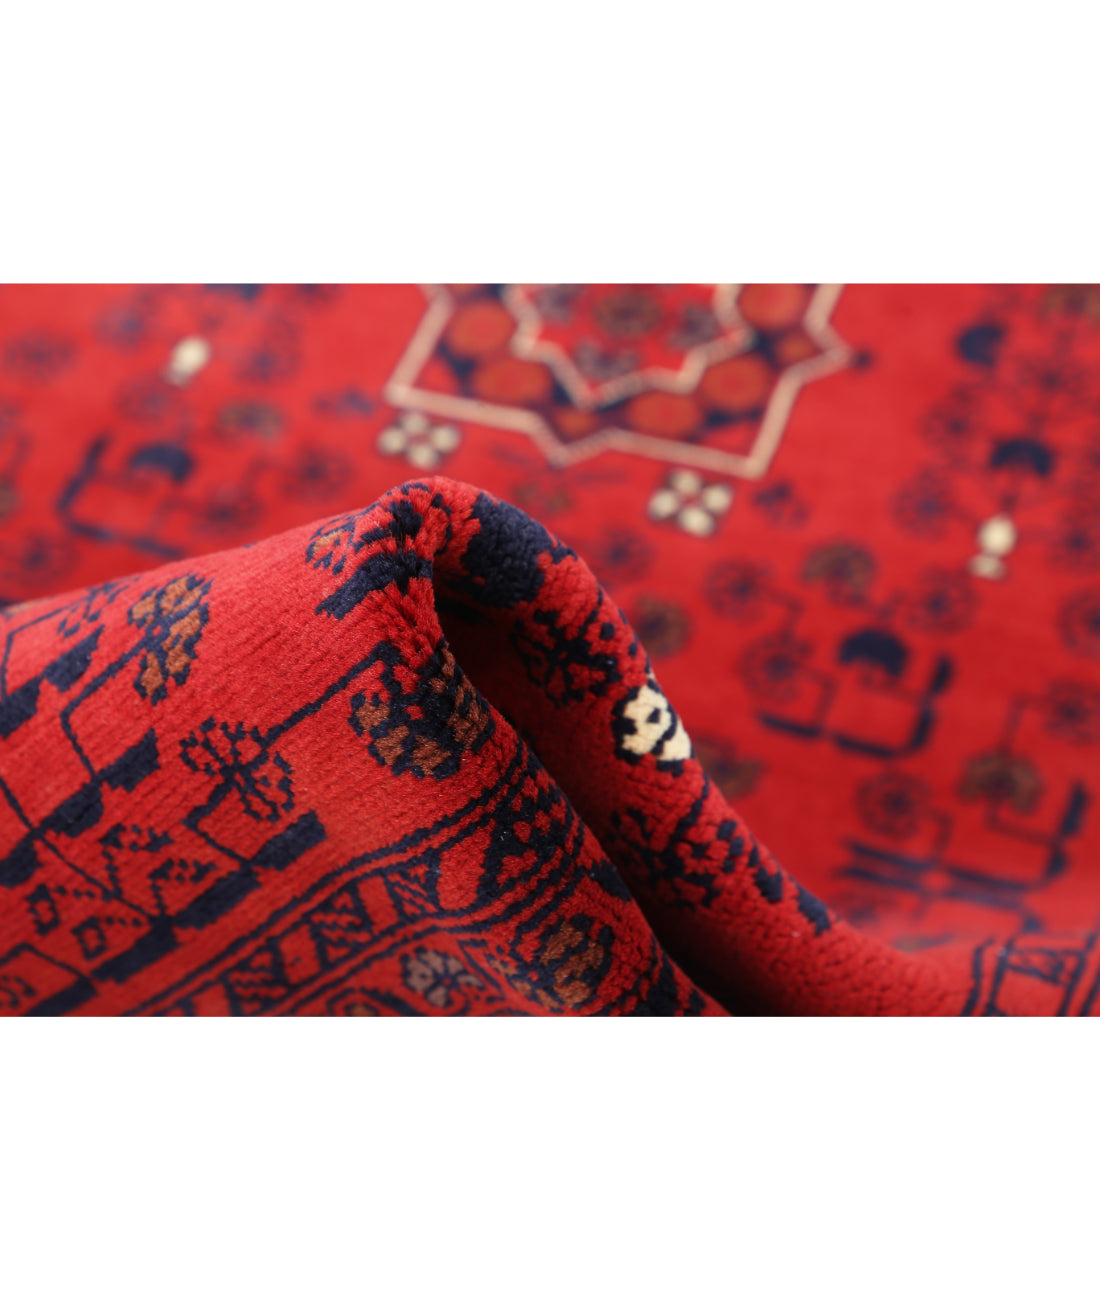 Hand Knotted Afghan Khamyab Wool Rug - 3'4'' x 4'8'' 3'4'' x 4'8'' (100 X 140) / Red / Blue